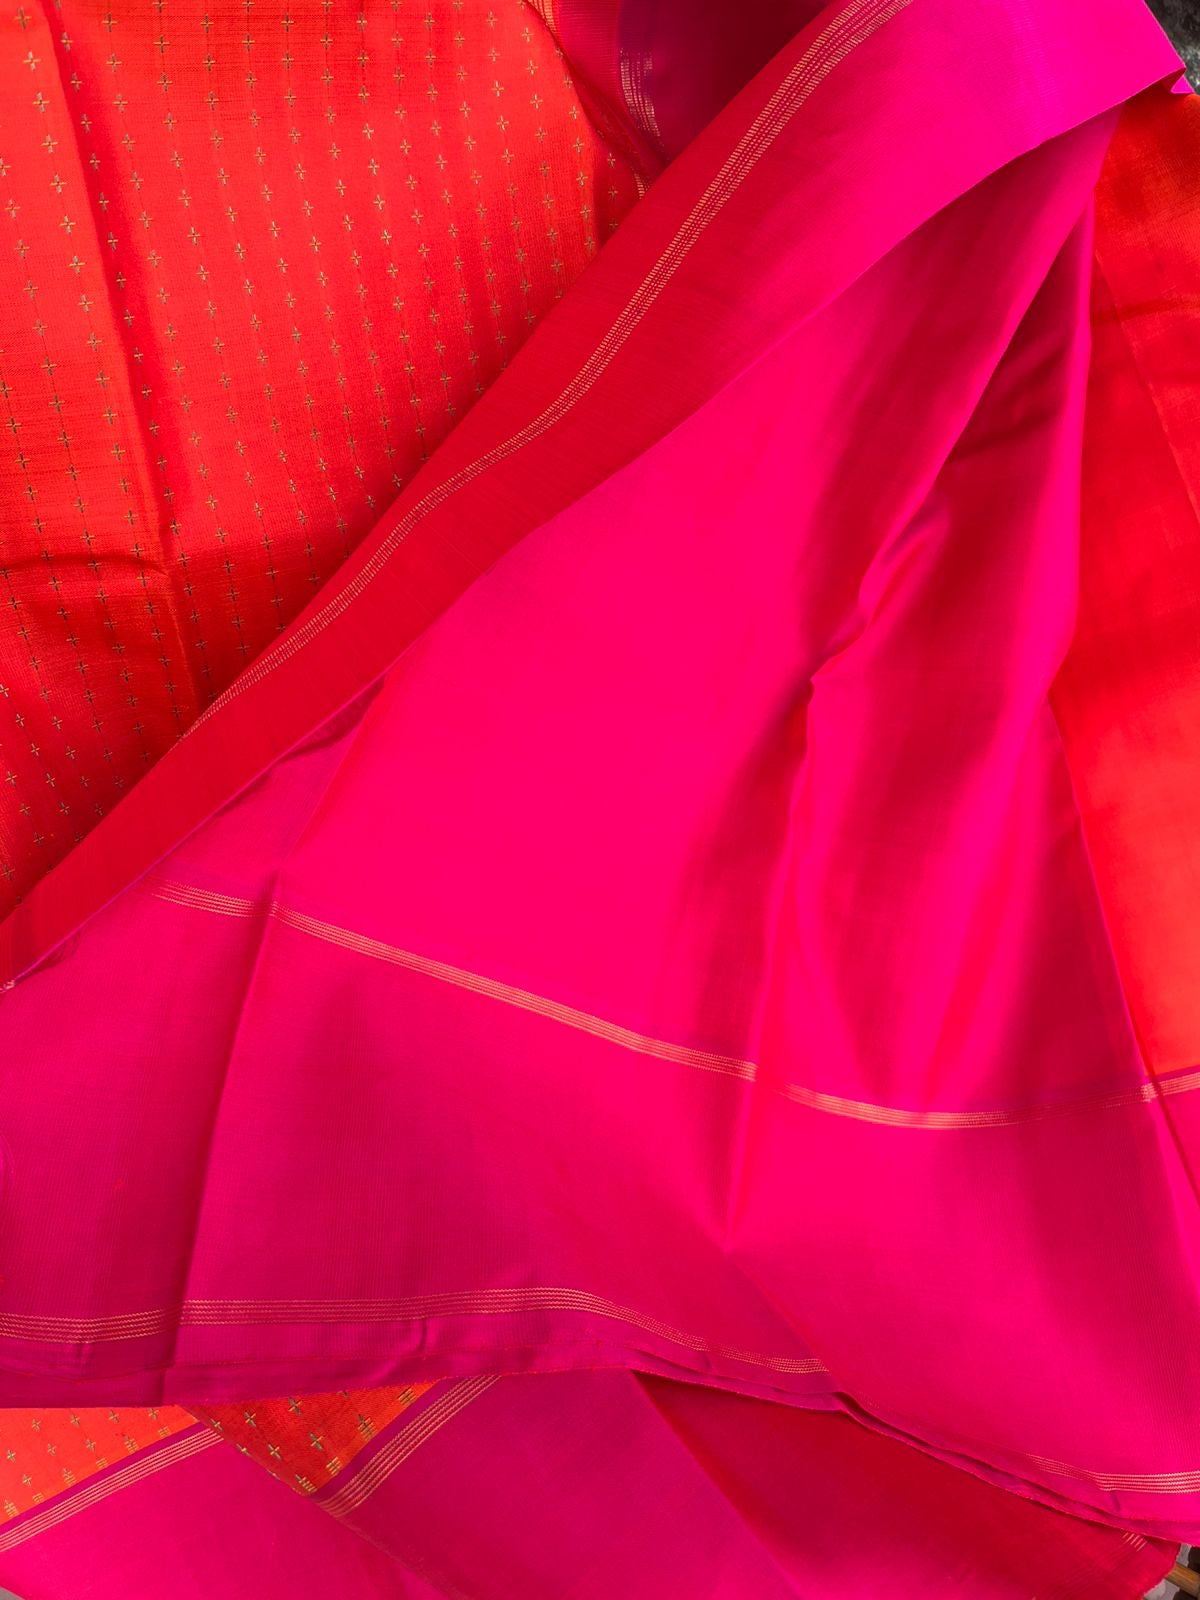 Meenakshi - Heirloom Kanchivaram - most beautiful orange and pink pluse buttas